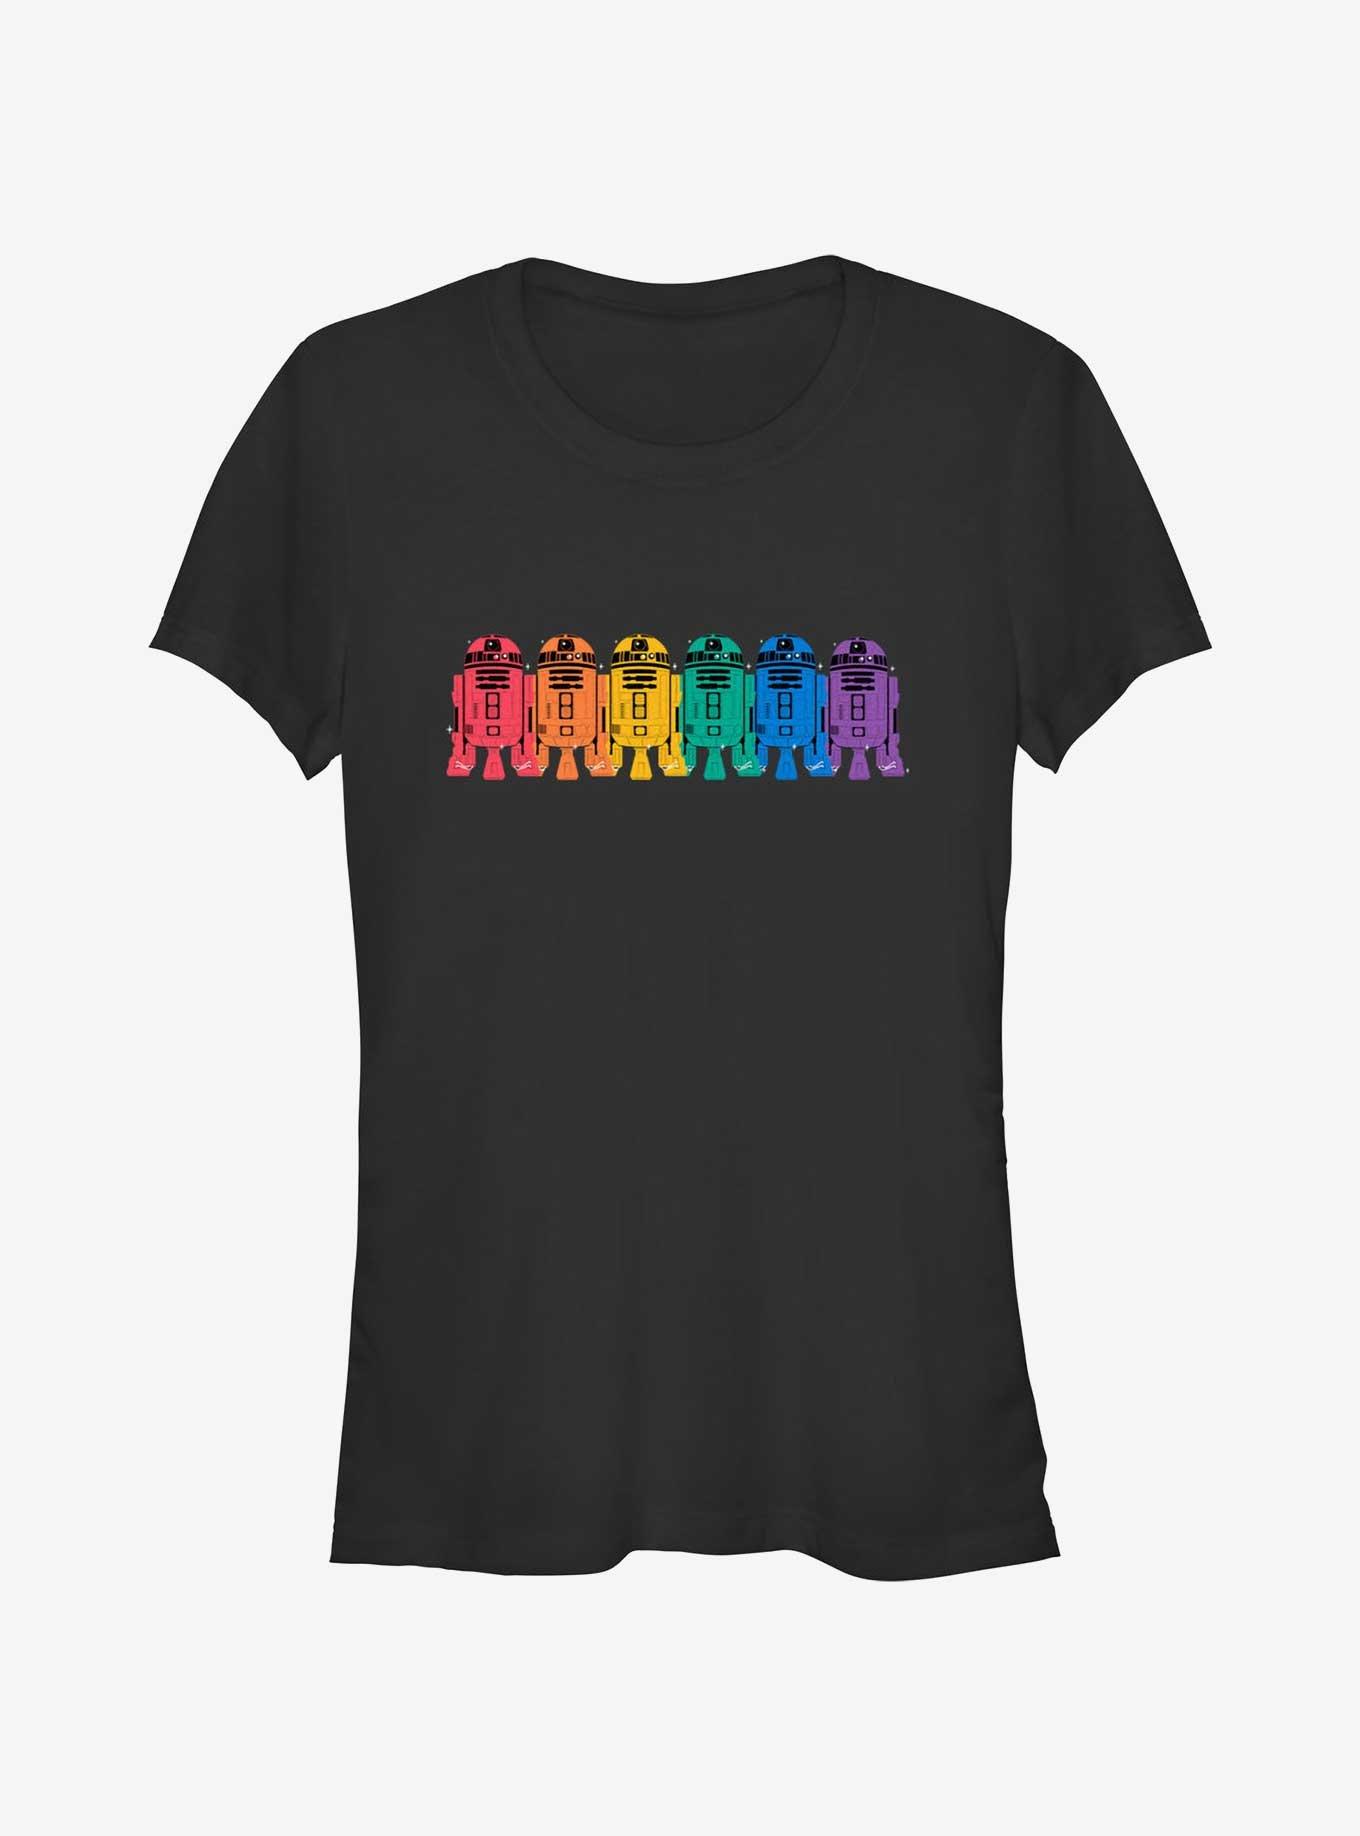 Star Wars R2D2 Overlap Rainbow Pride T-Shirt